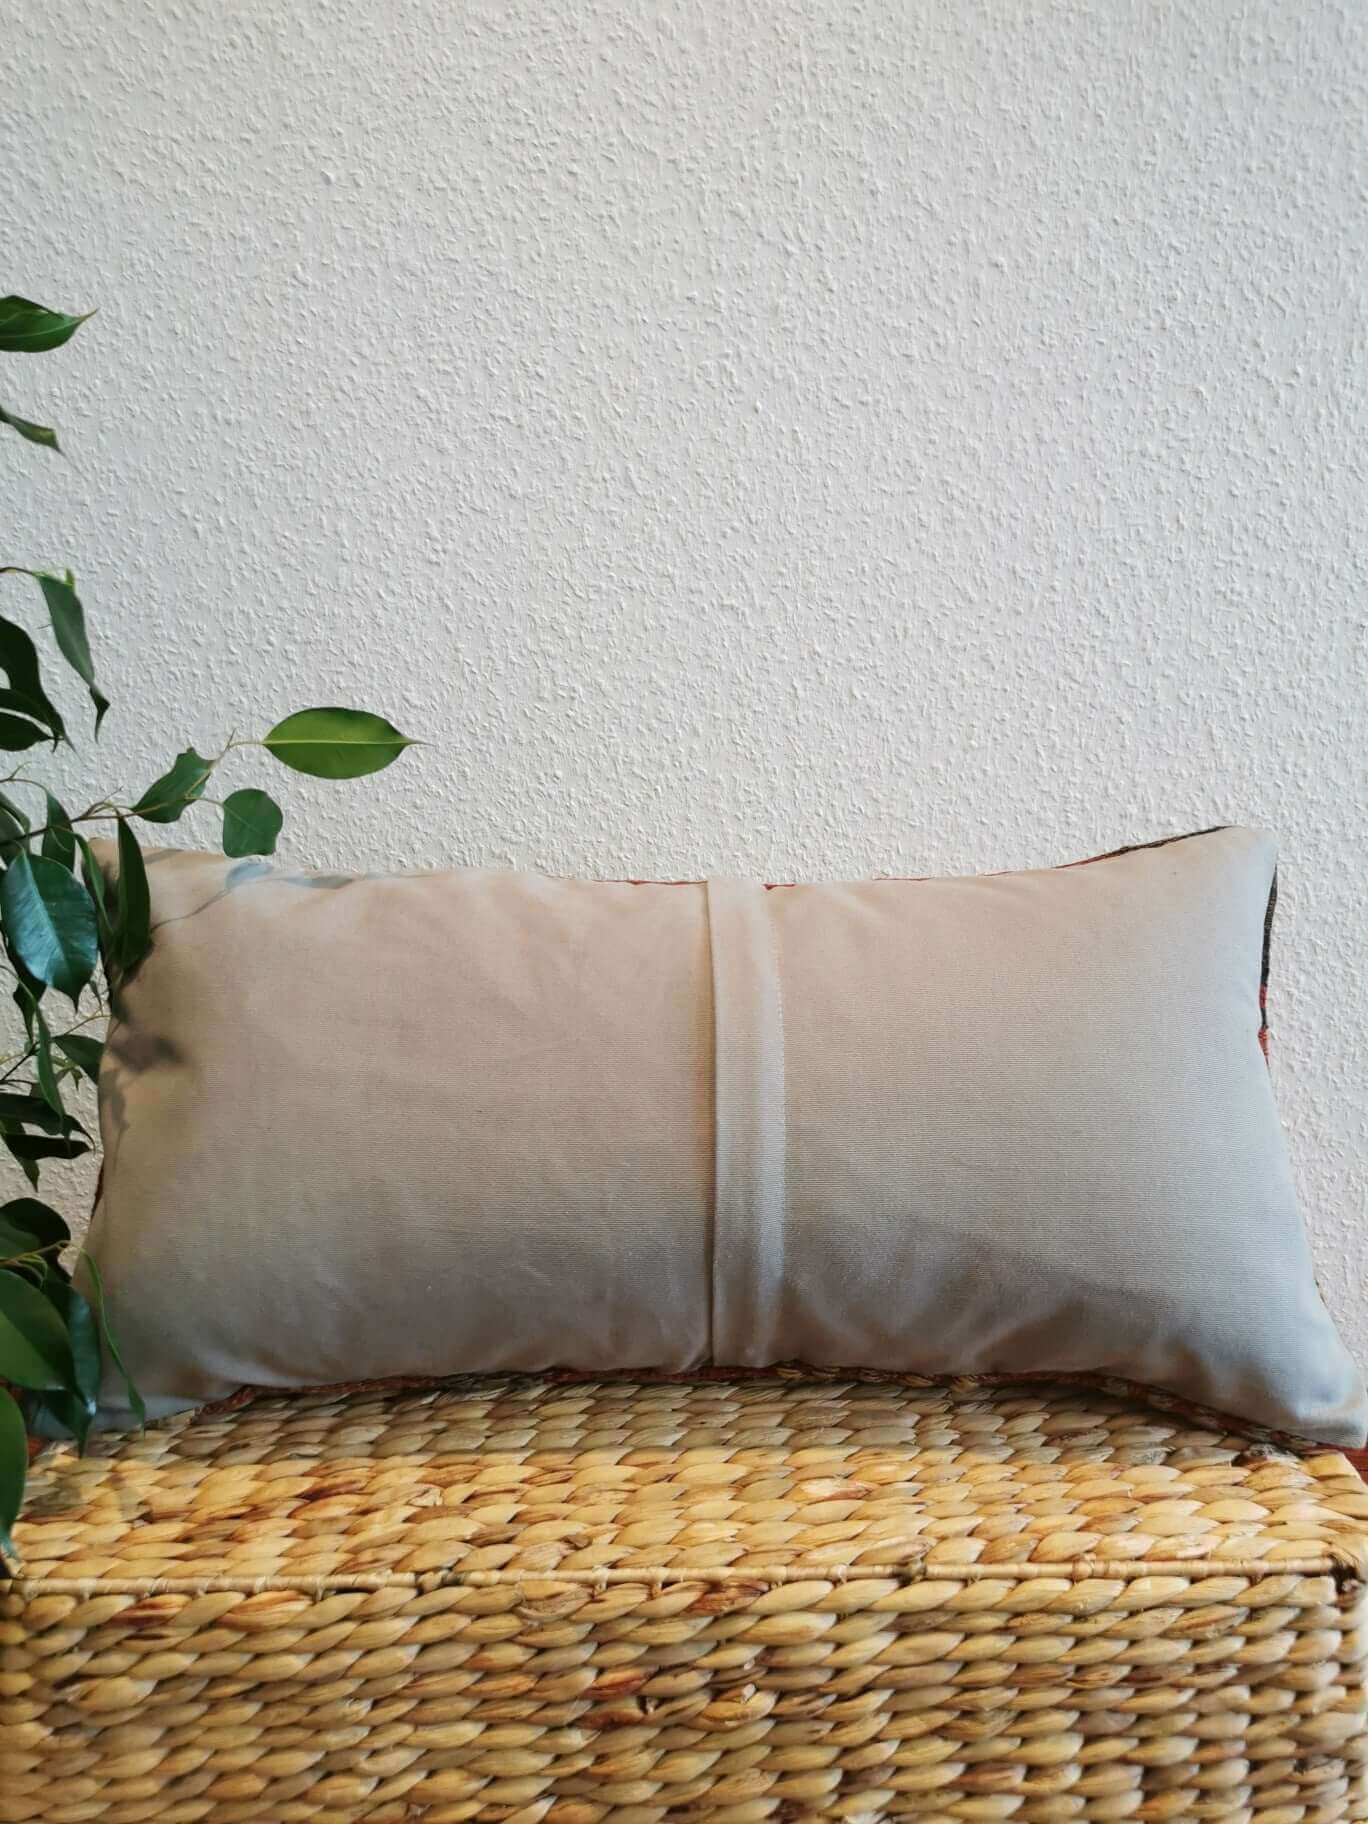 Kilim Pillow Cover, Turkey, old, unique, vintage, Kelim, Kelimkissen, Kissenhülle, pillow case, boho, eclectic, arabic design, Turkish, Anatolian